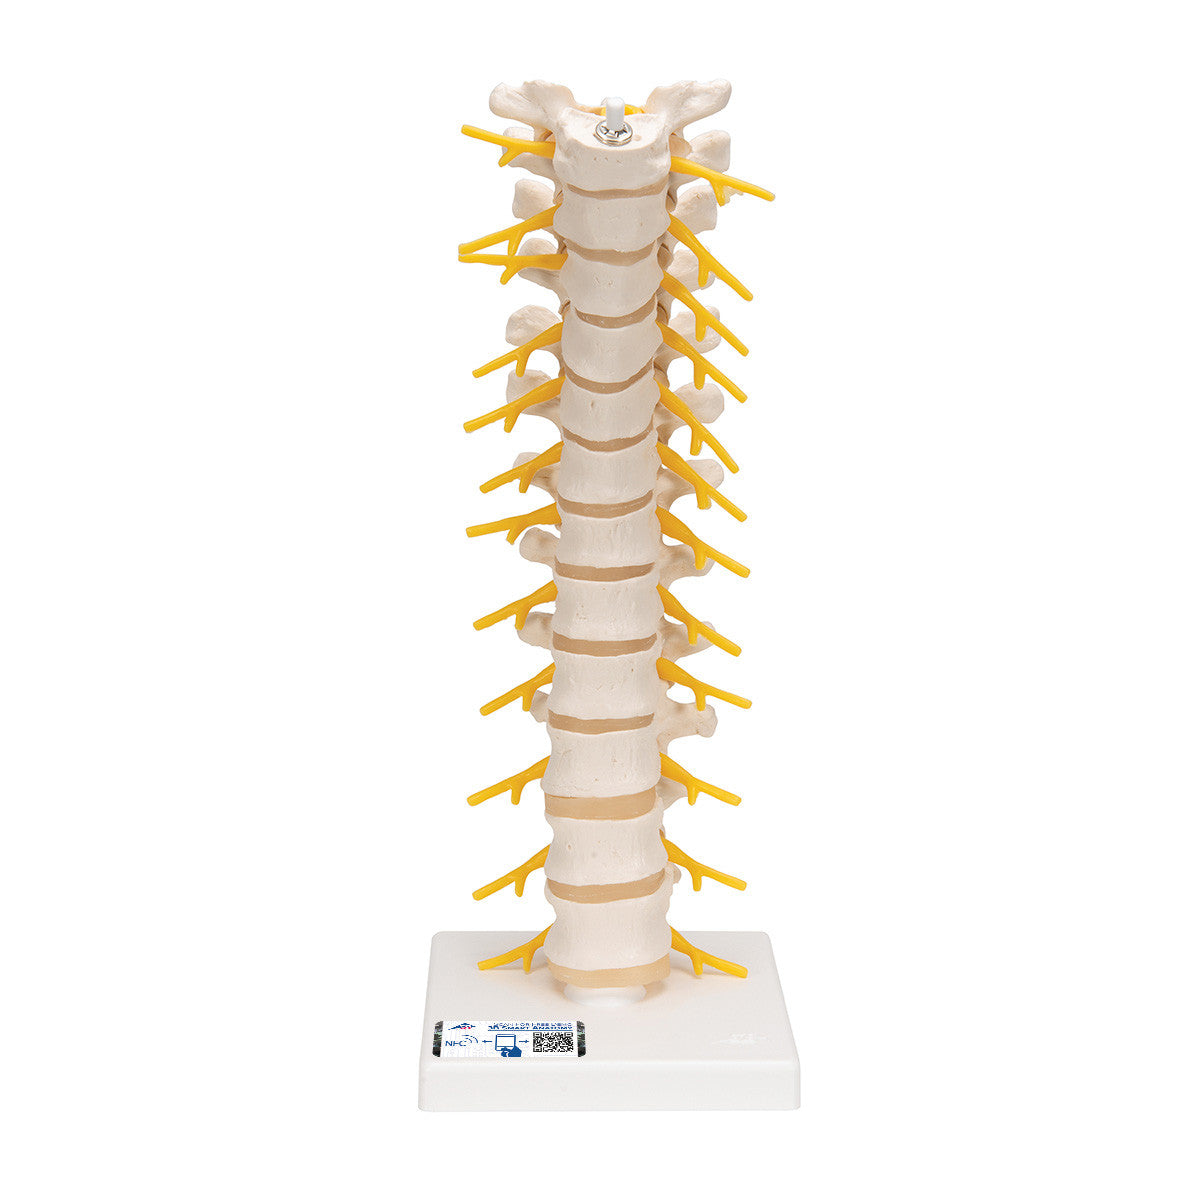 a73_01_1200_1200_thoracic-human-spinal-column-model-3b-smart-anatomy__06658.1589753043.1280.1280.jpg